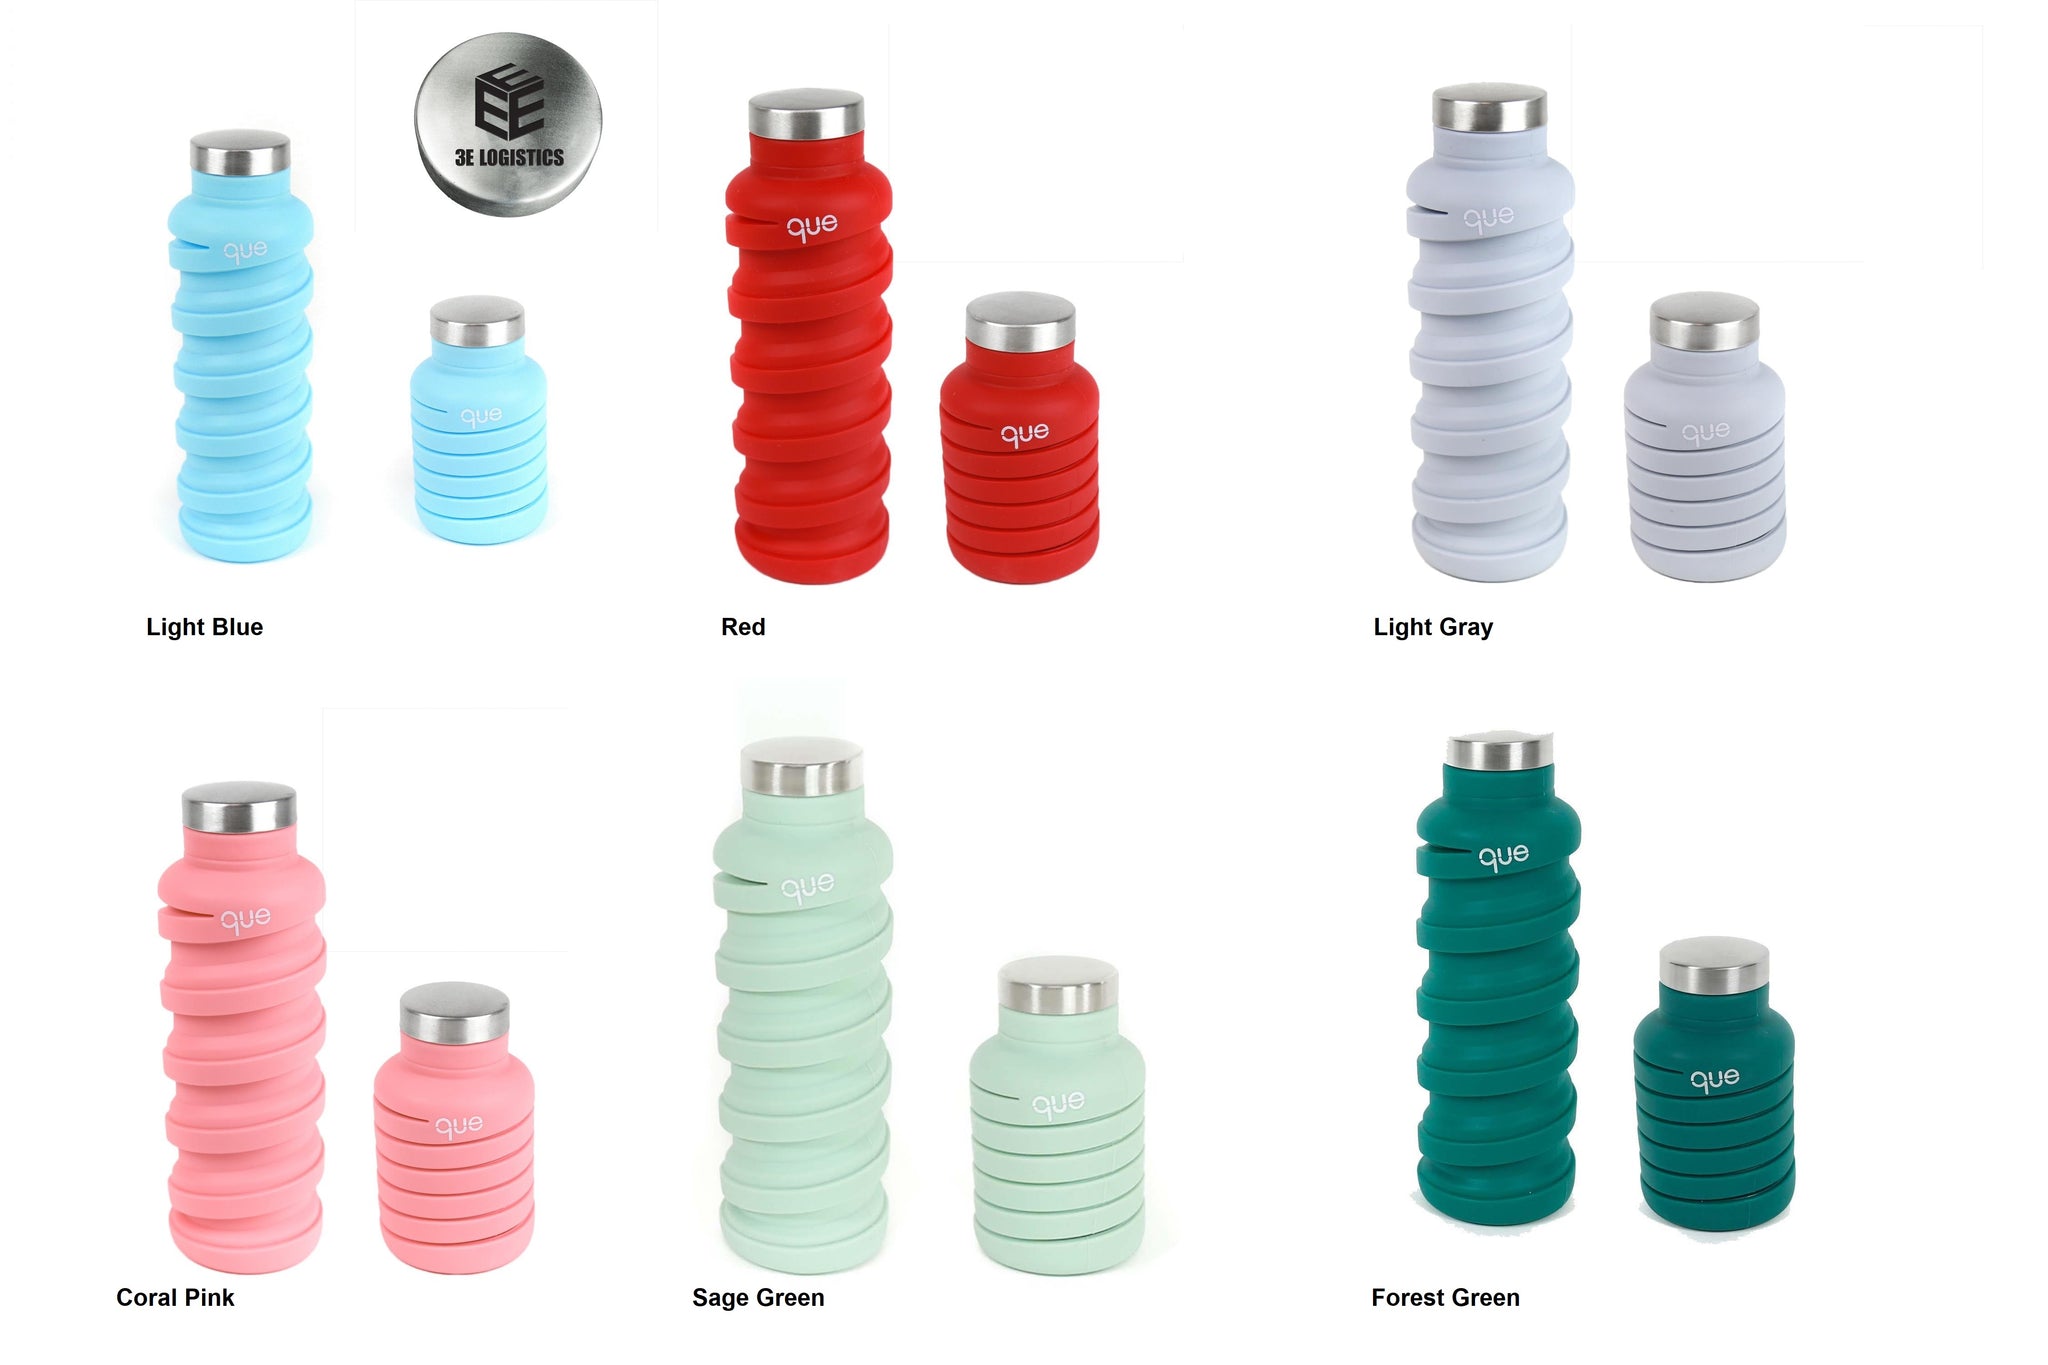 Custom Insulated Water Bottles - PROMOrx